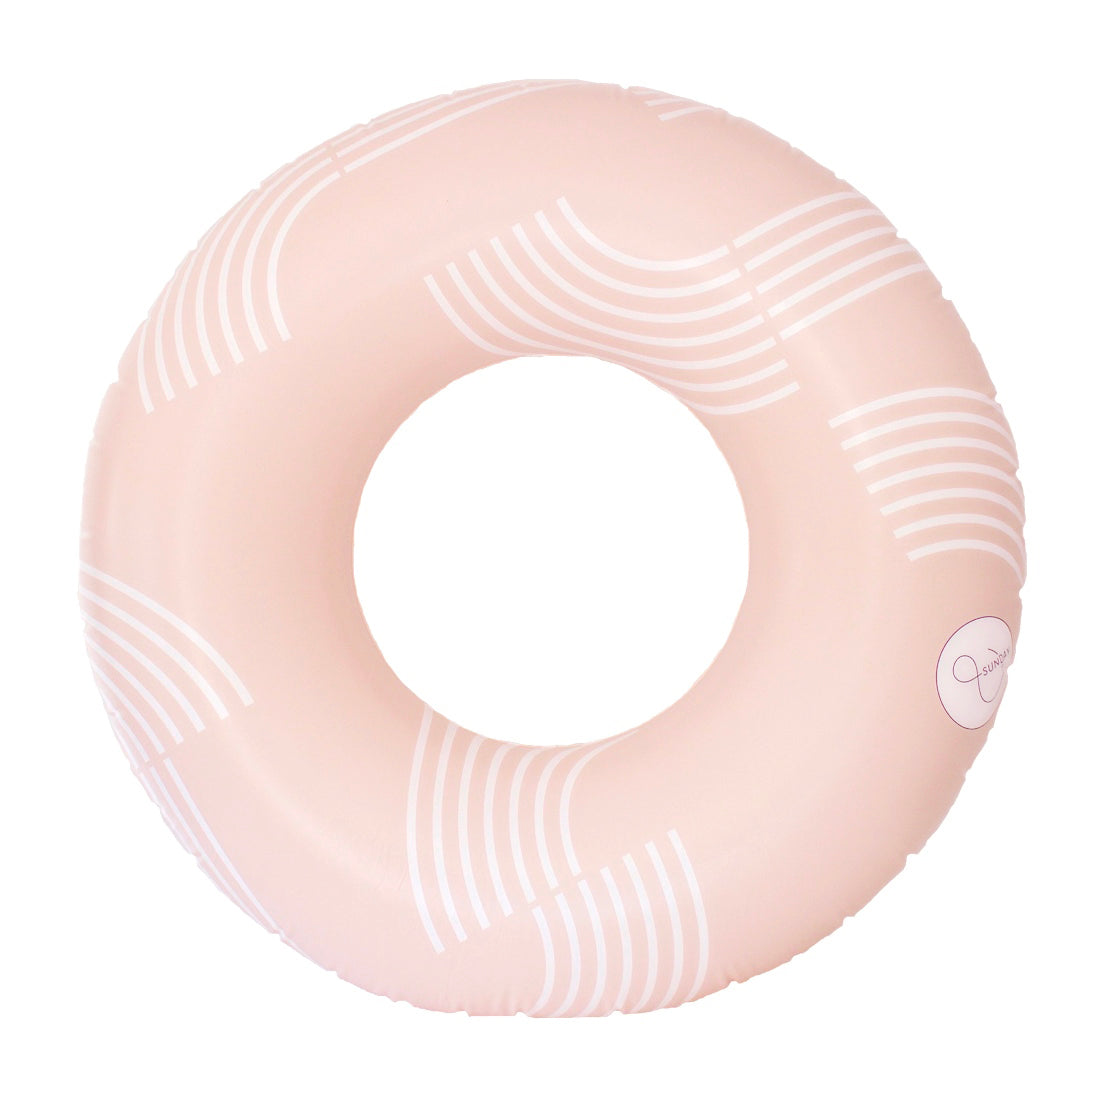 Circular Floating Tube for Pool